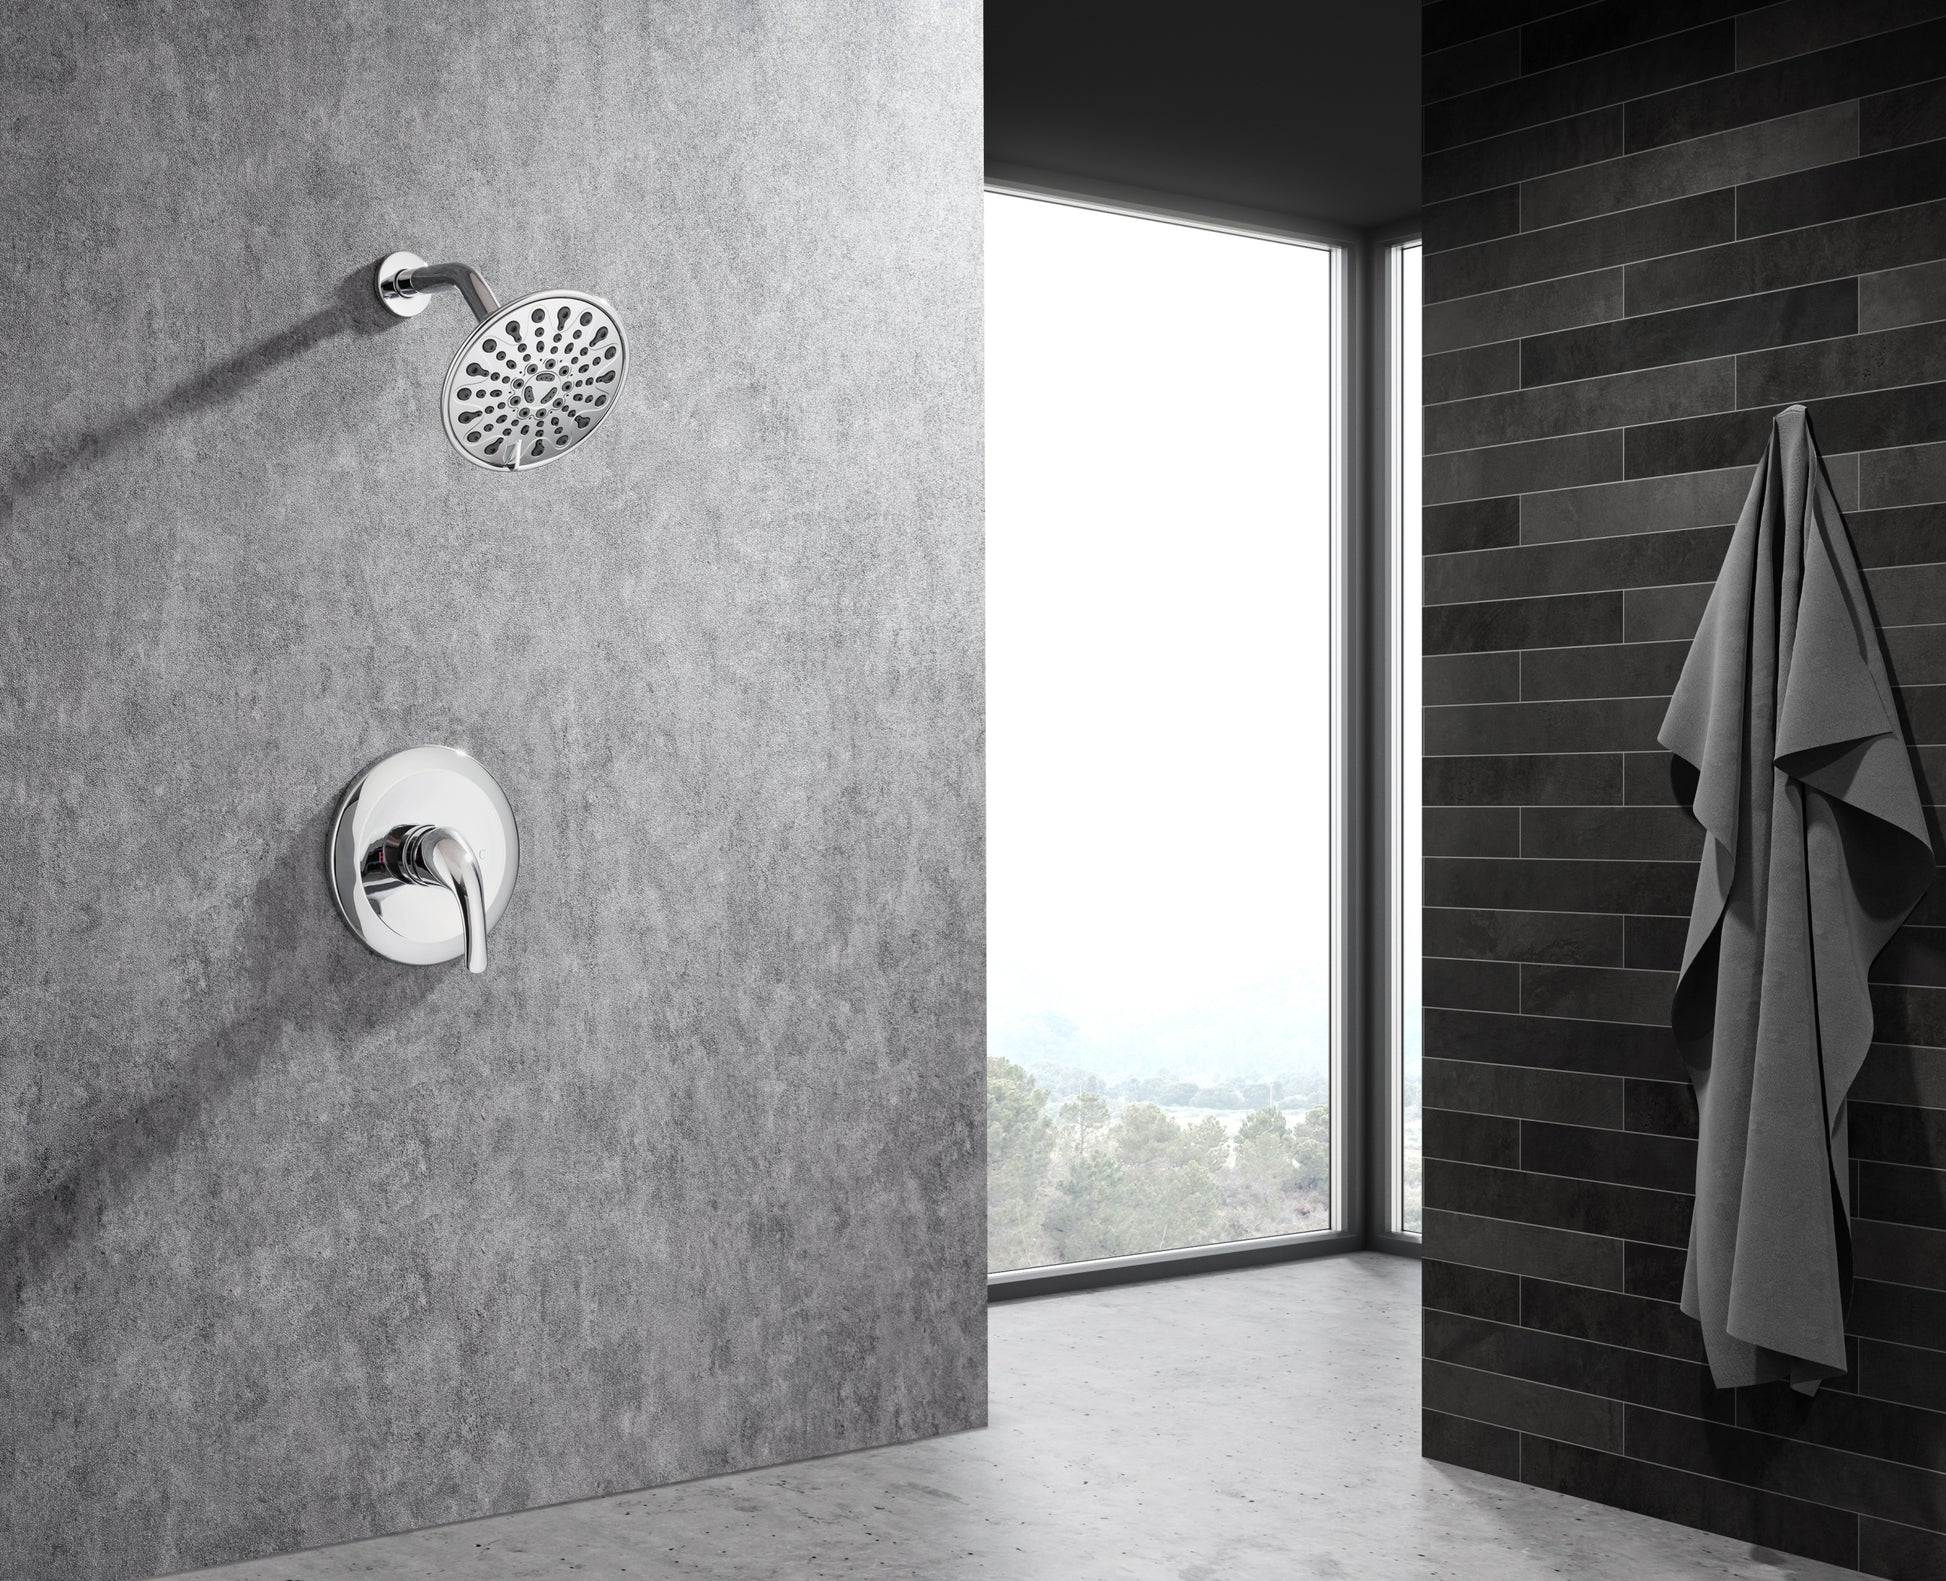 6 In. 6 Spray Balancing Shower Head Shower Faucet chrome-brass